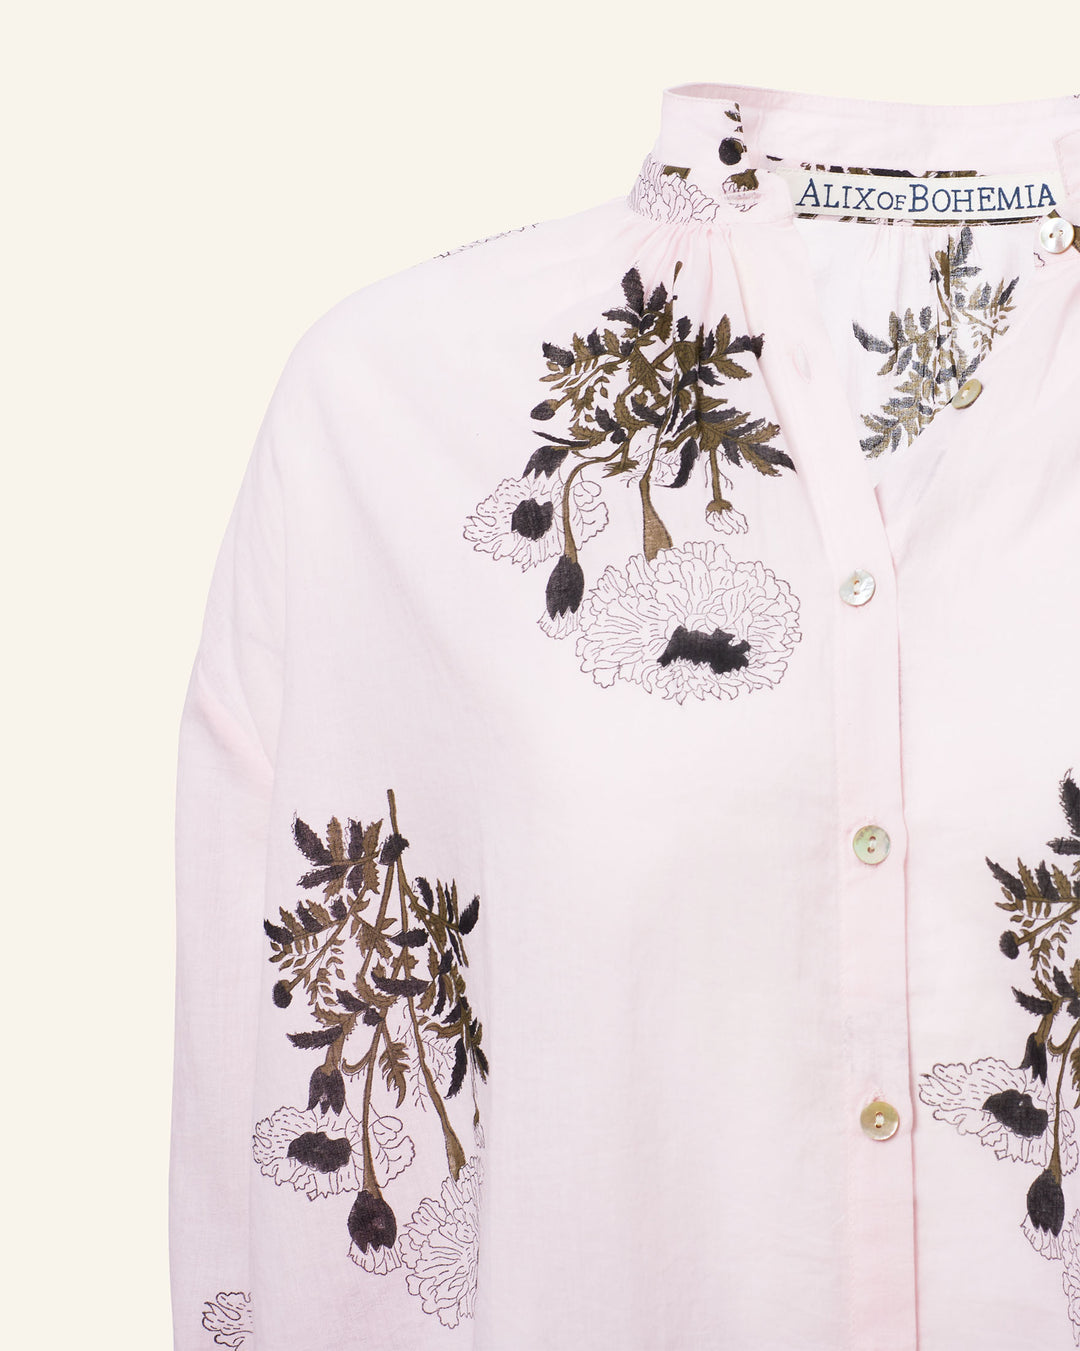 Kiki Anemone Bloom Shirt